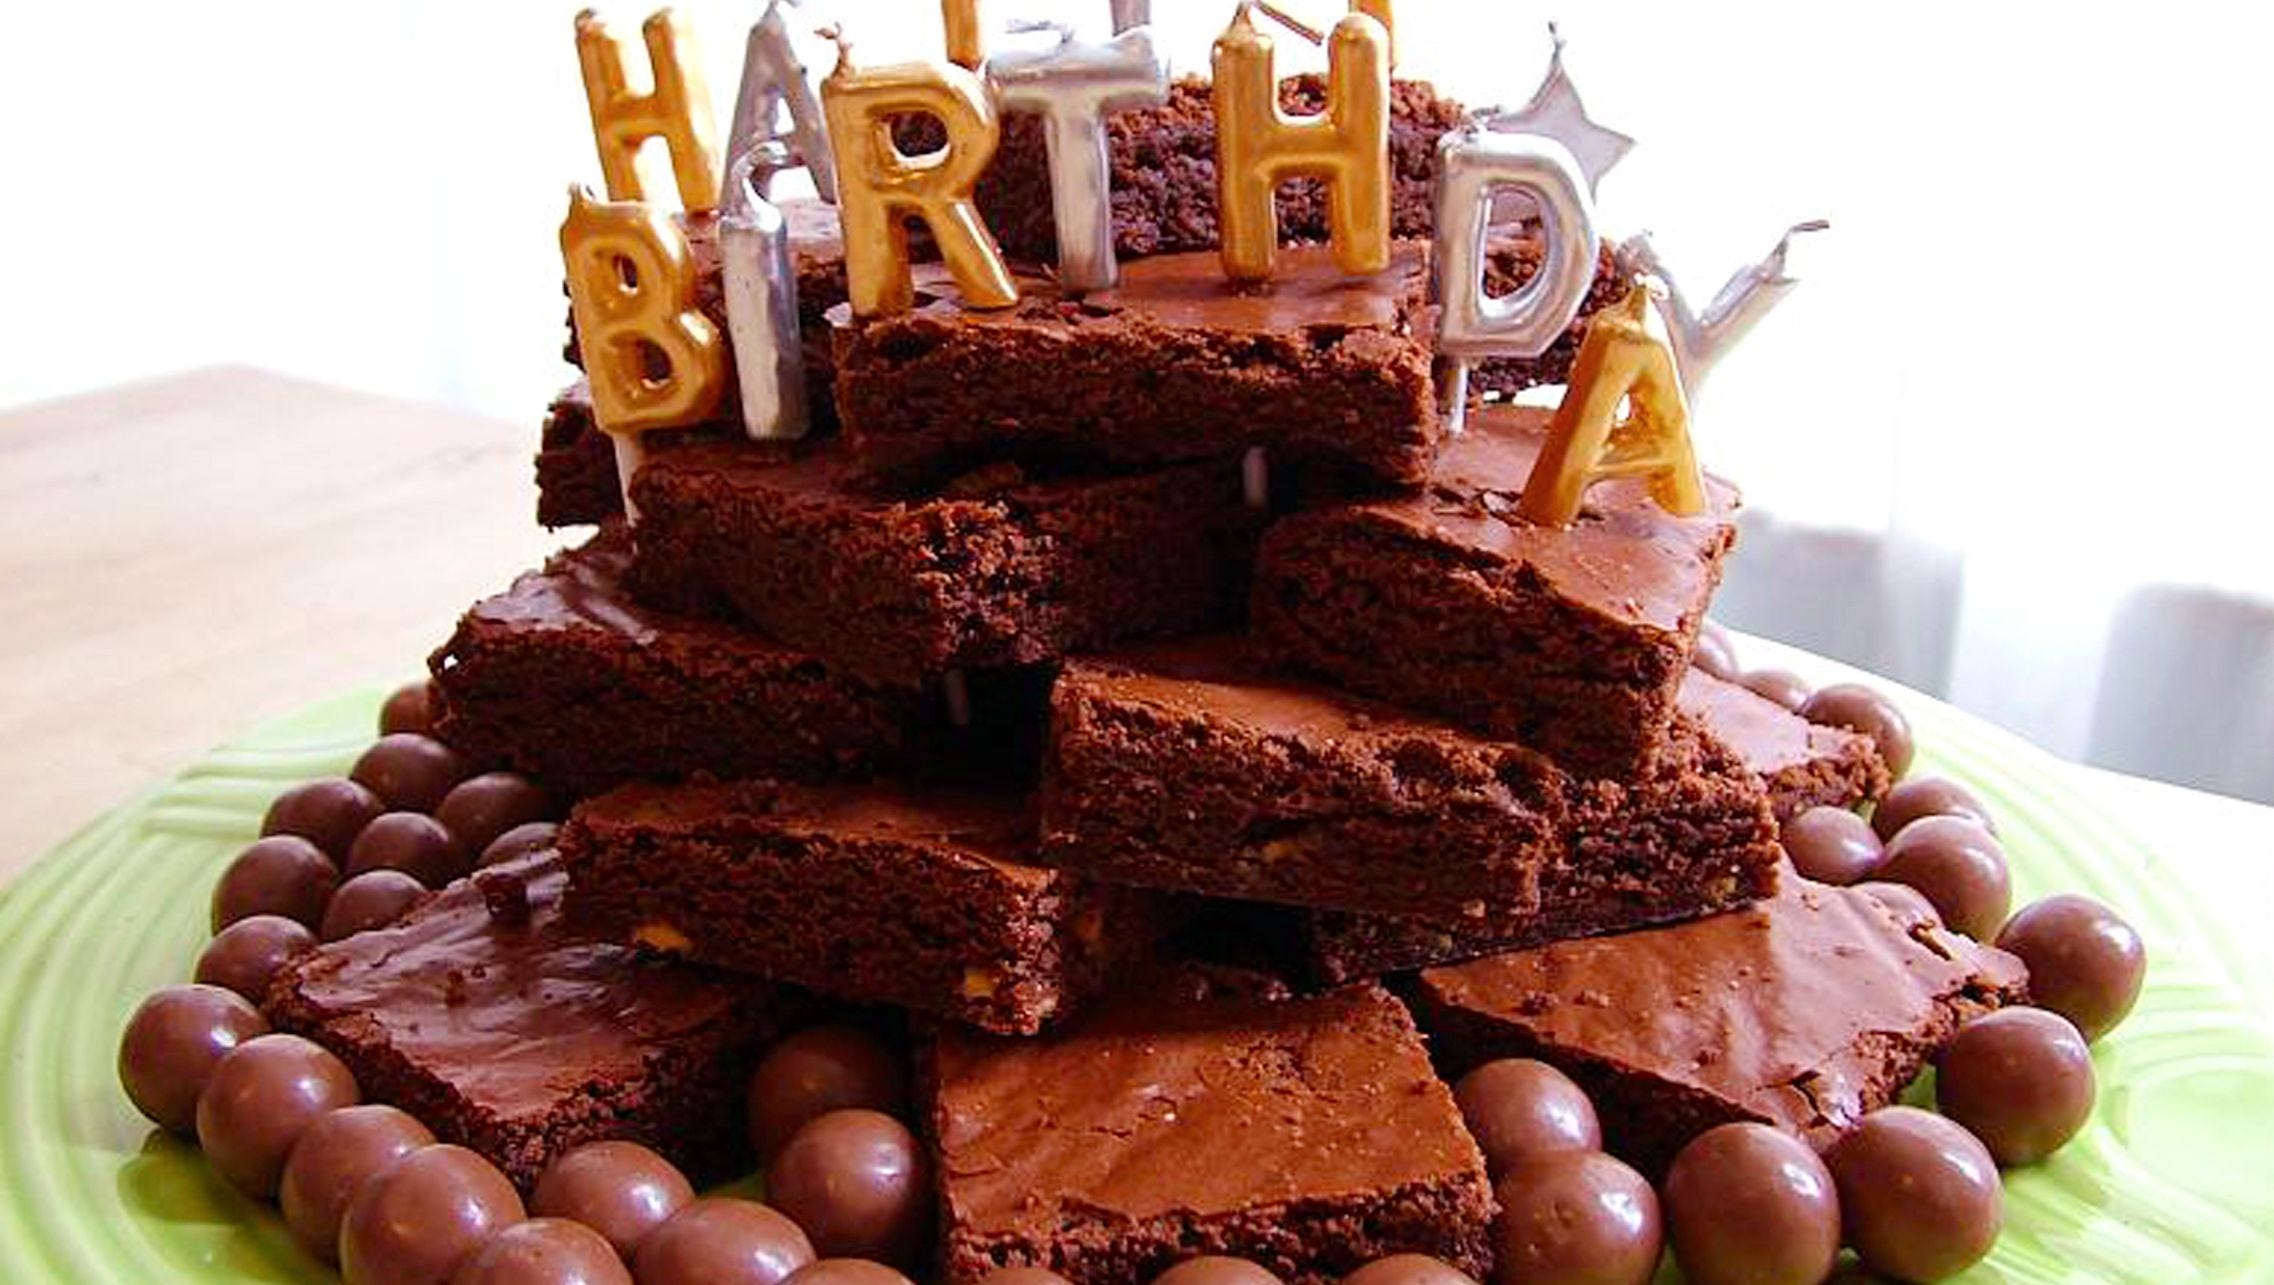 Birthday Dessert Ideas Other Than A Cake